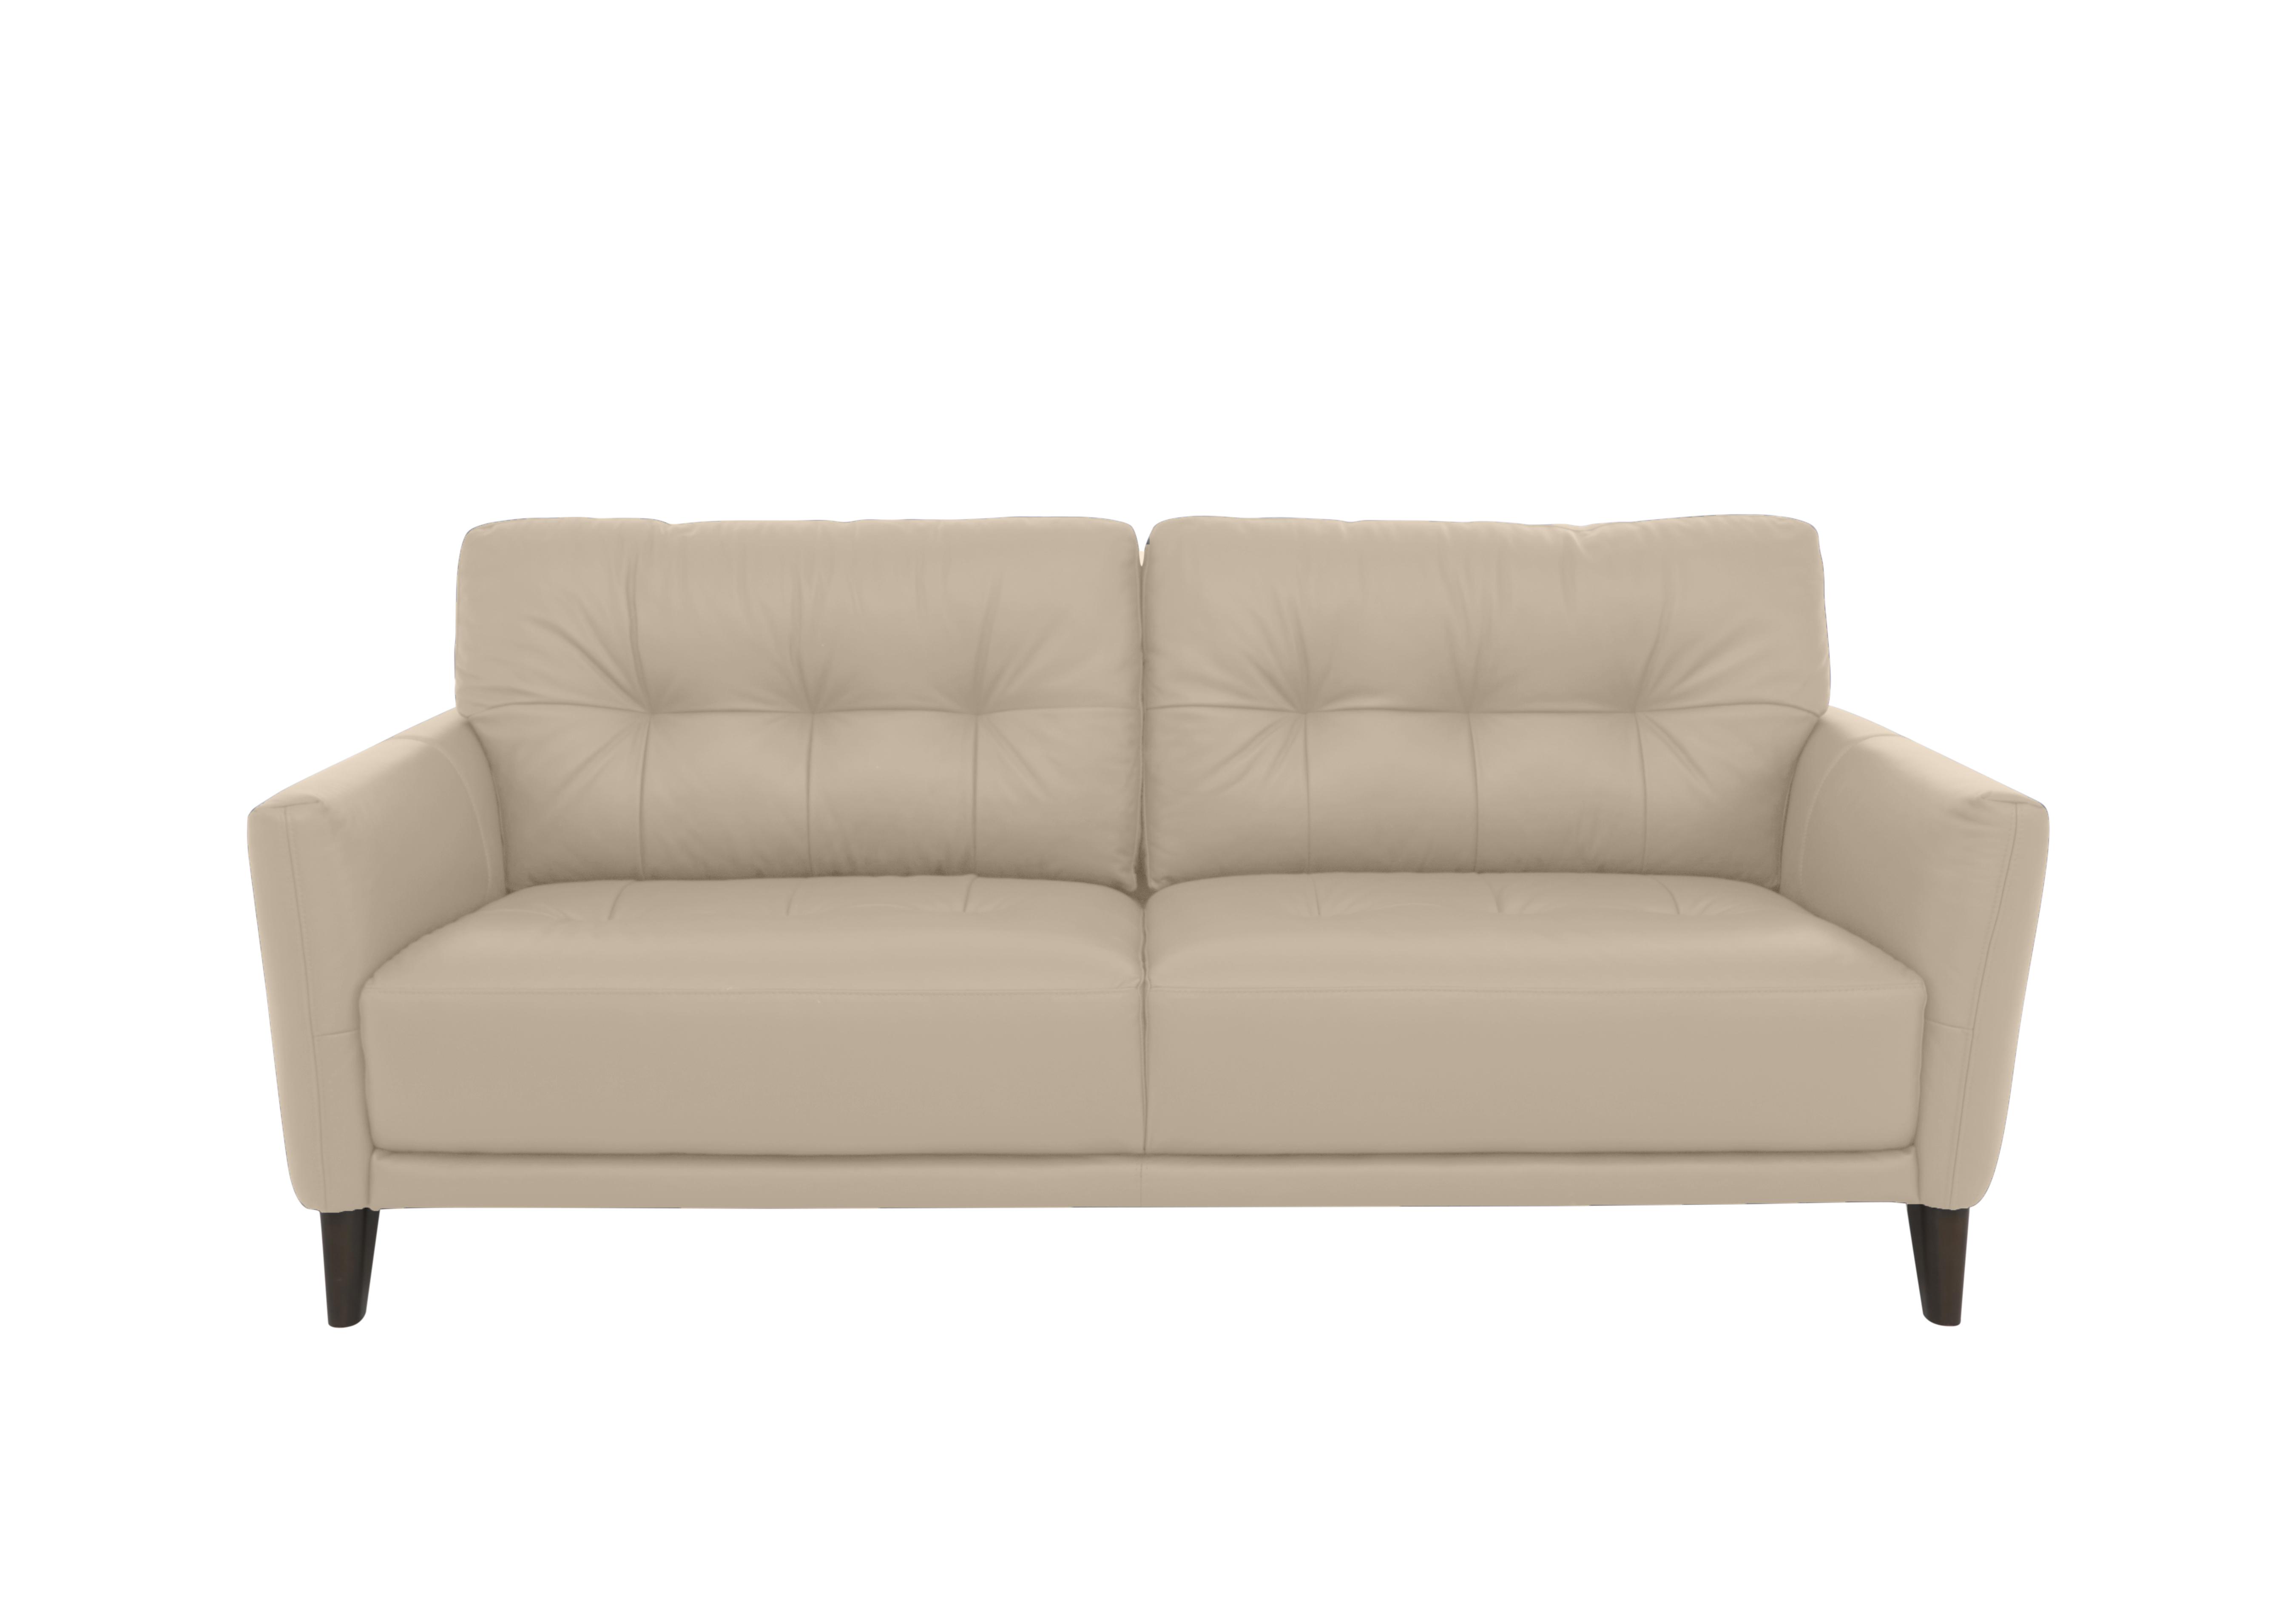 Uno Leather 3 Seater Sofa in Bv-041e Dapple Grey on Furniture Village